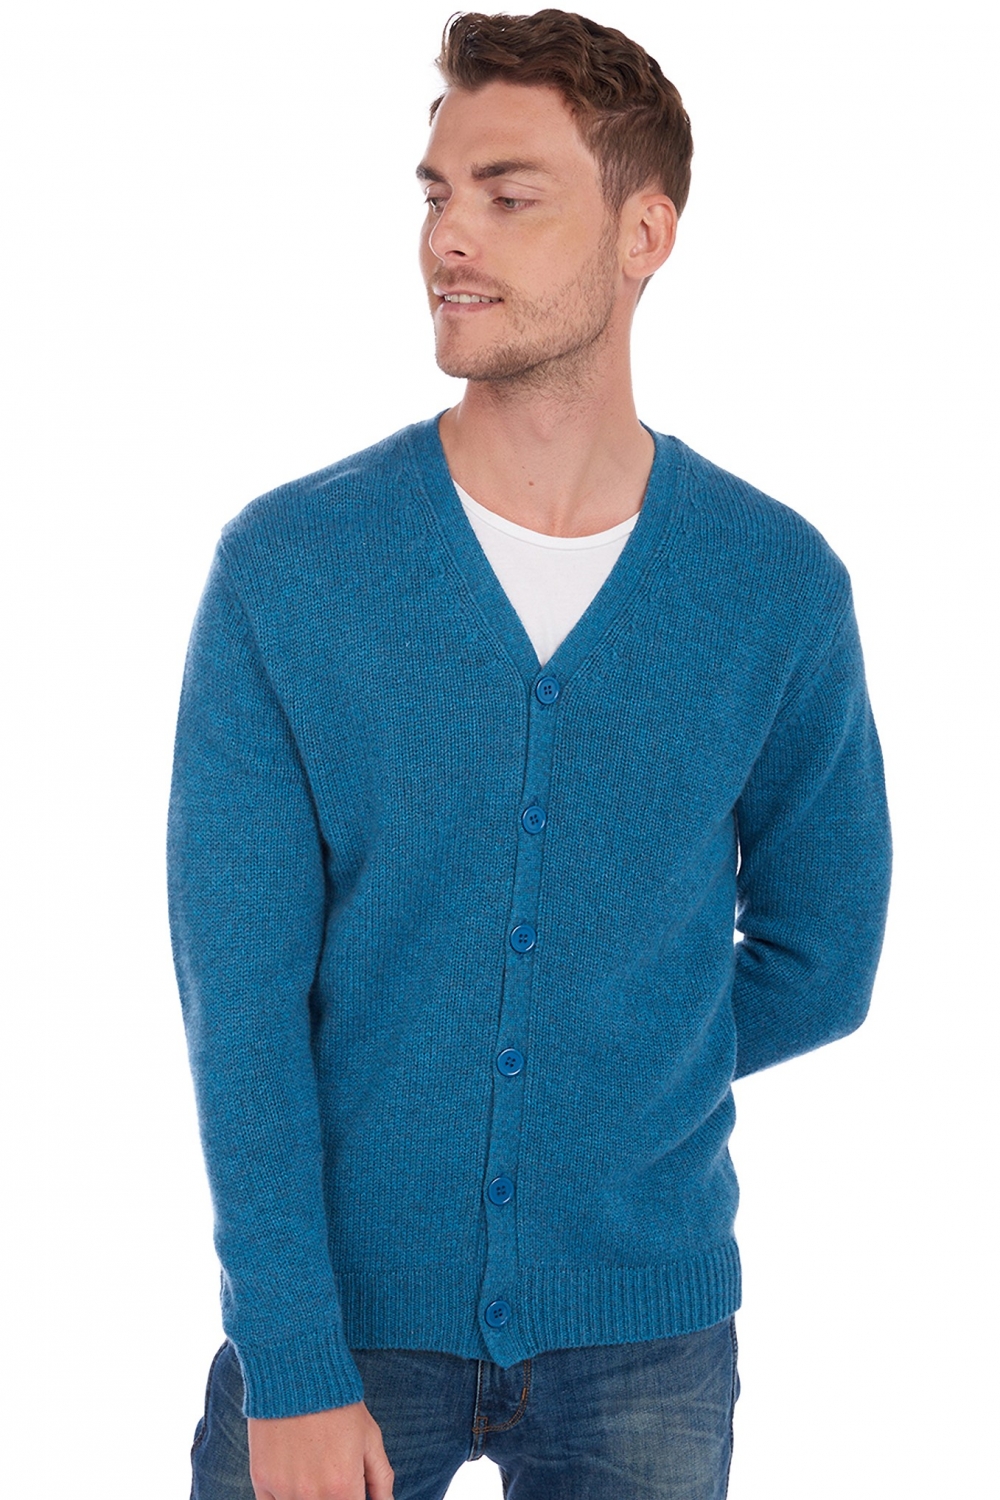 Cashmere men waistcoat sleeveless sweaters aden manor blue xl